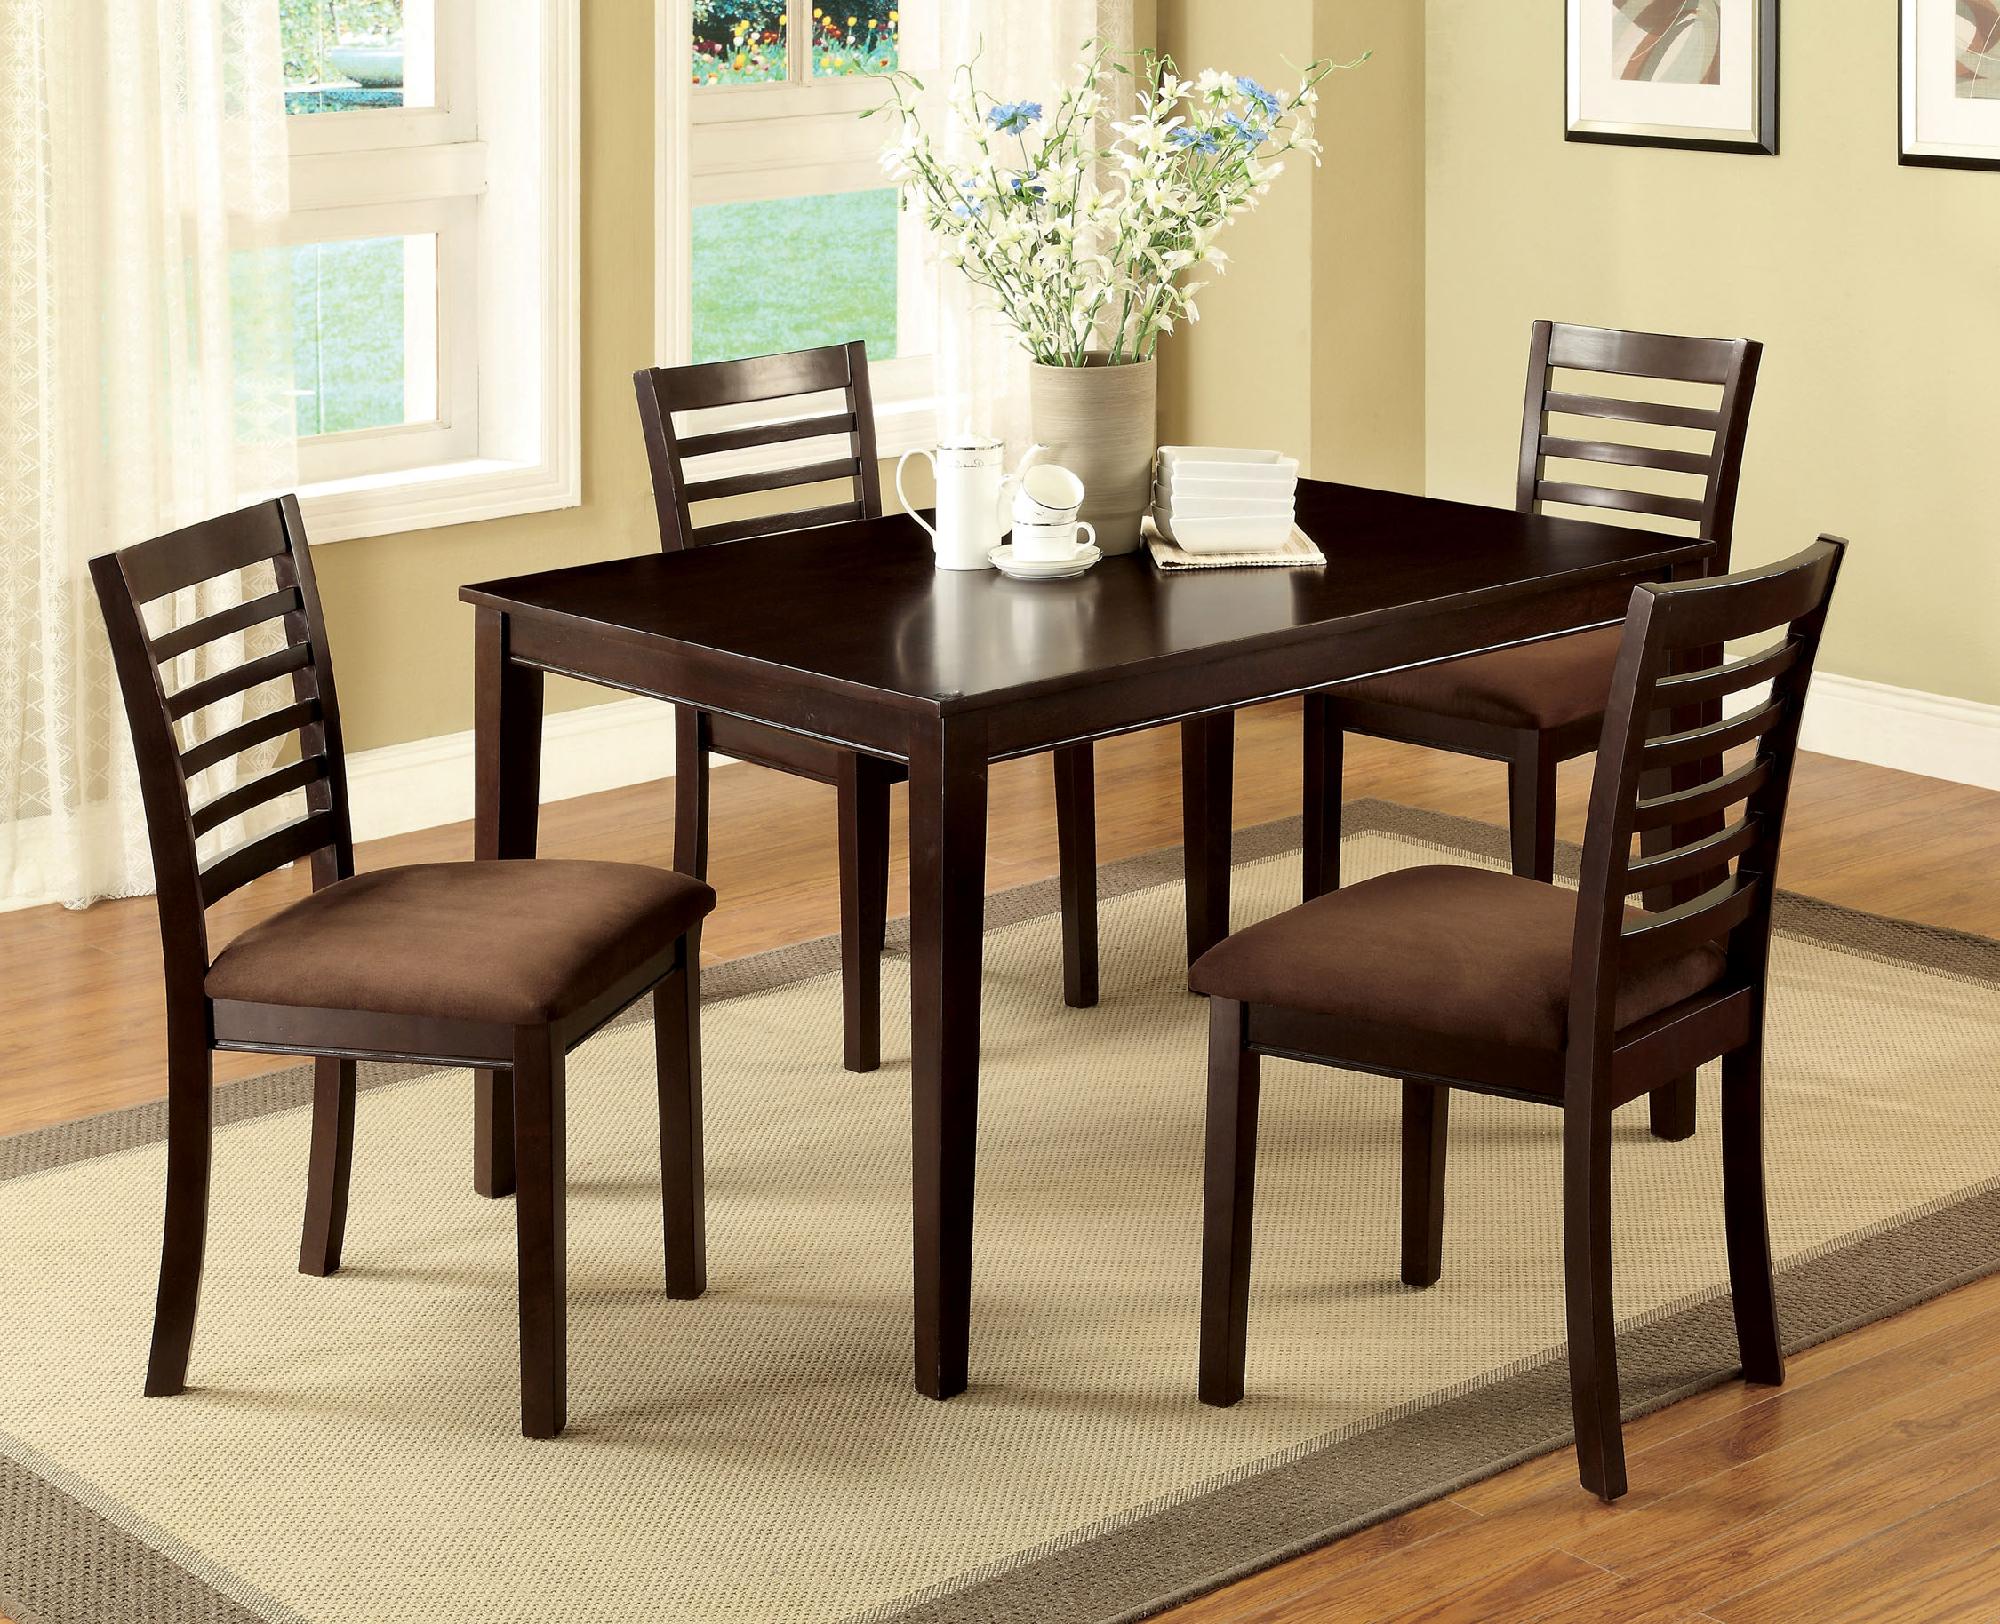 Furniture of America Larkans Espresso 5-Piece Dining Table Set
